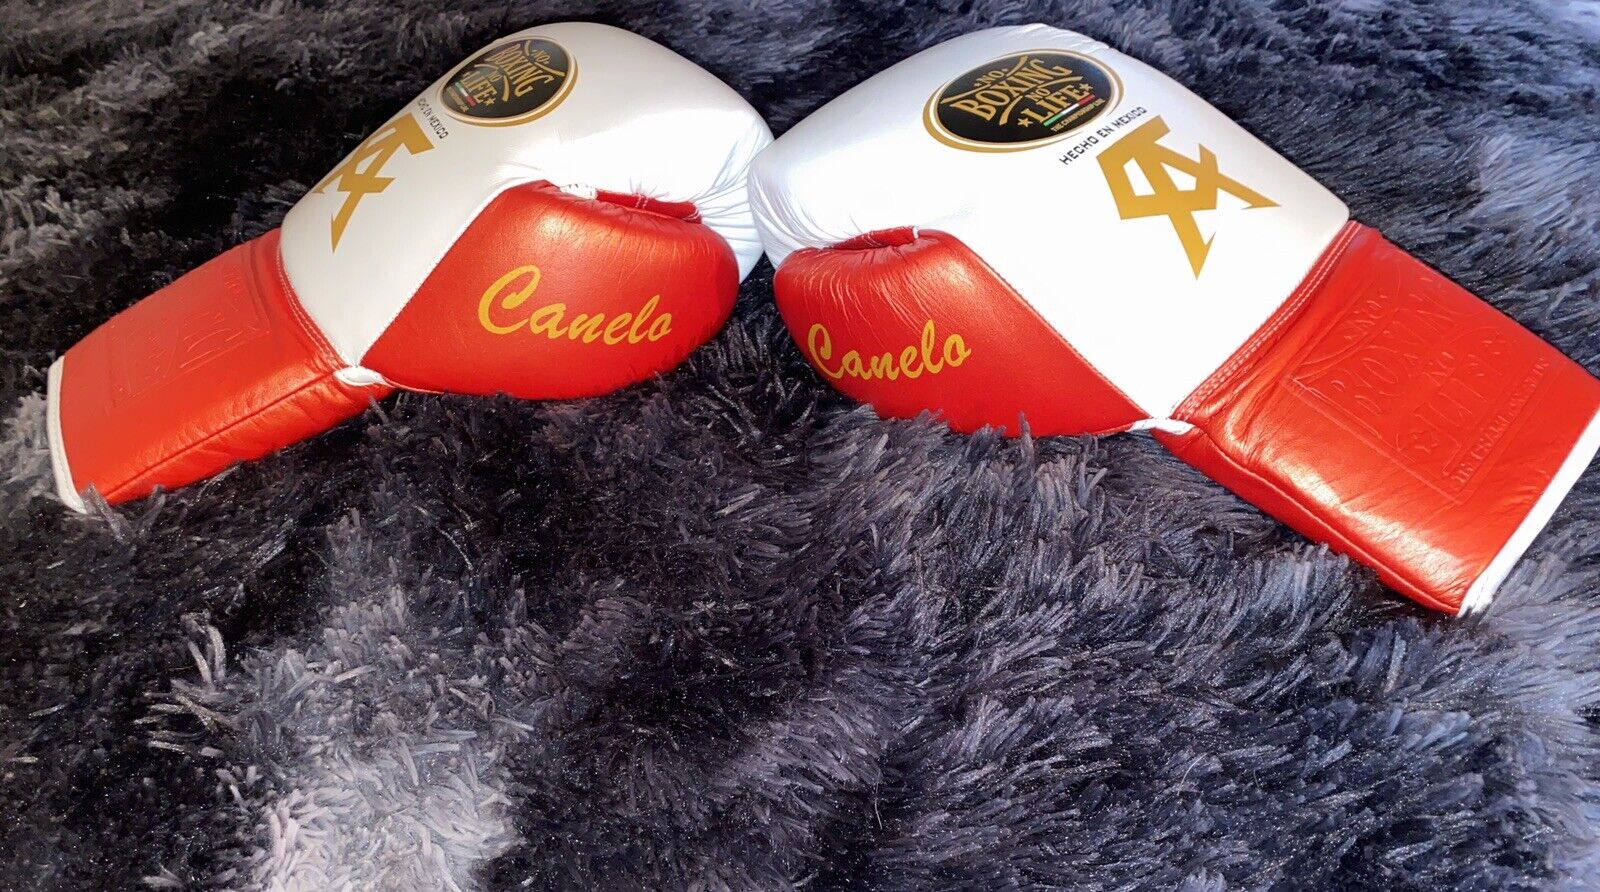 Canelo Boxing Gloves 16 oz (No Boxing No Life)